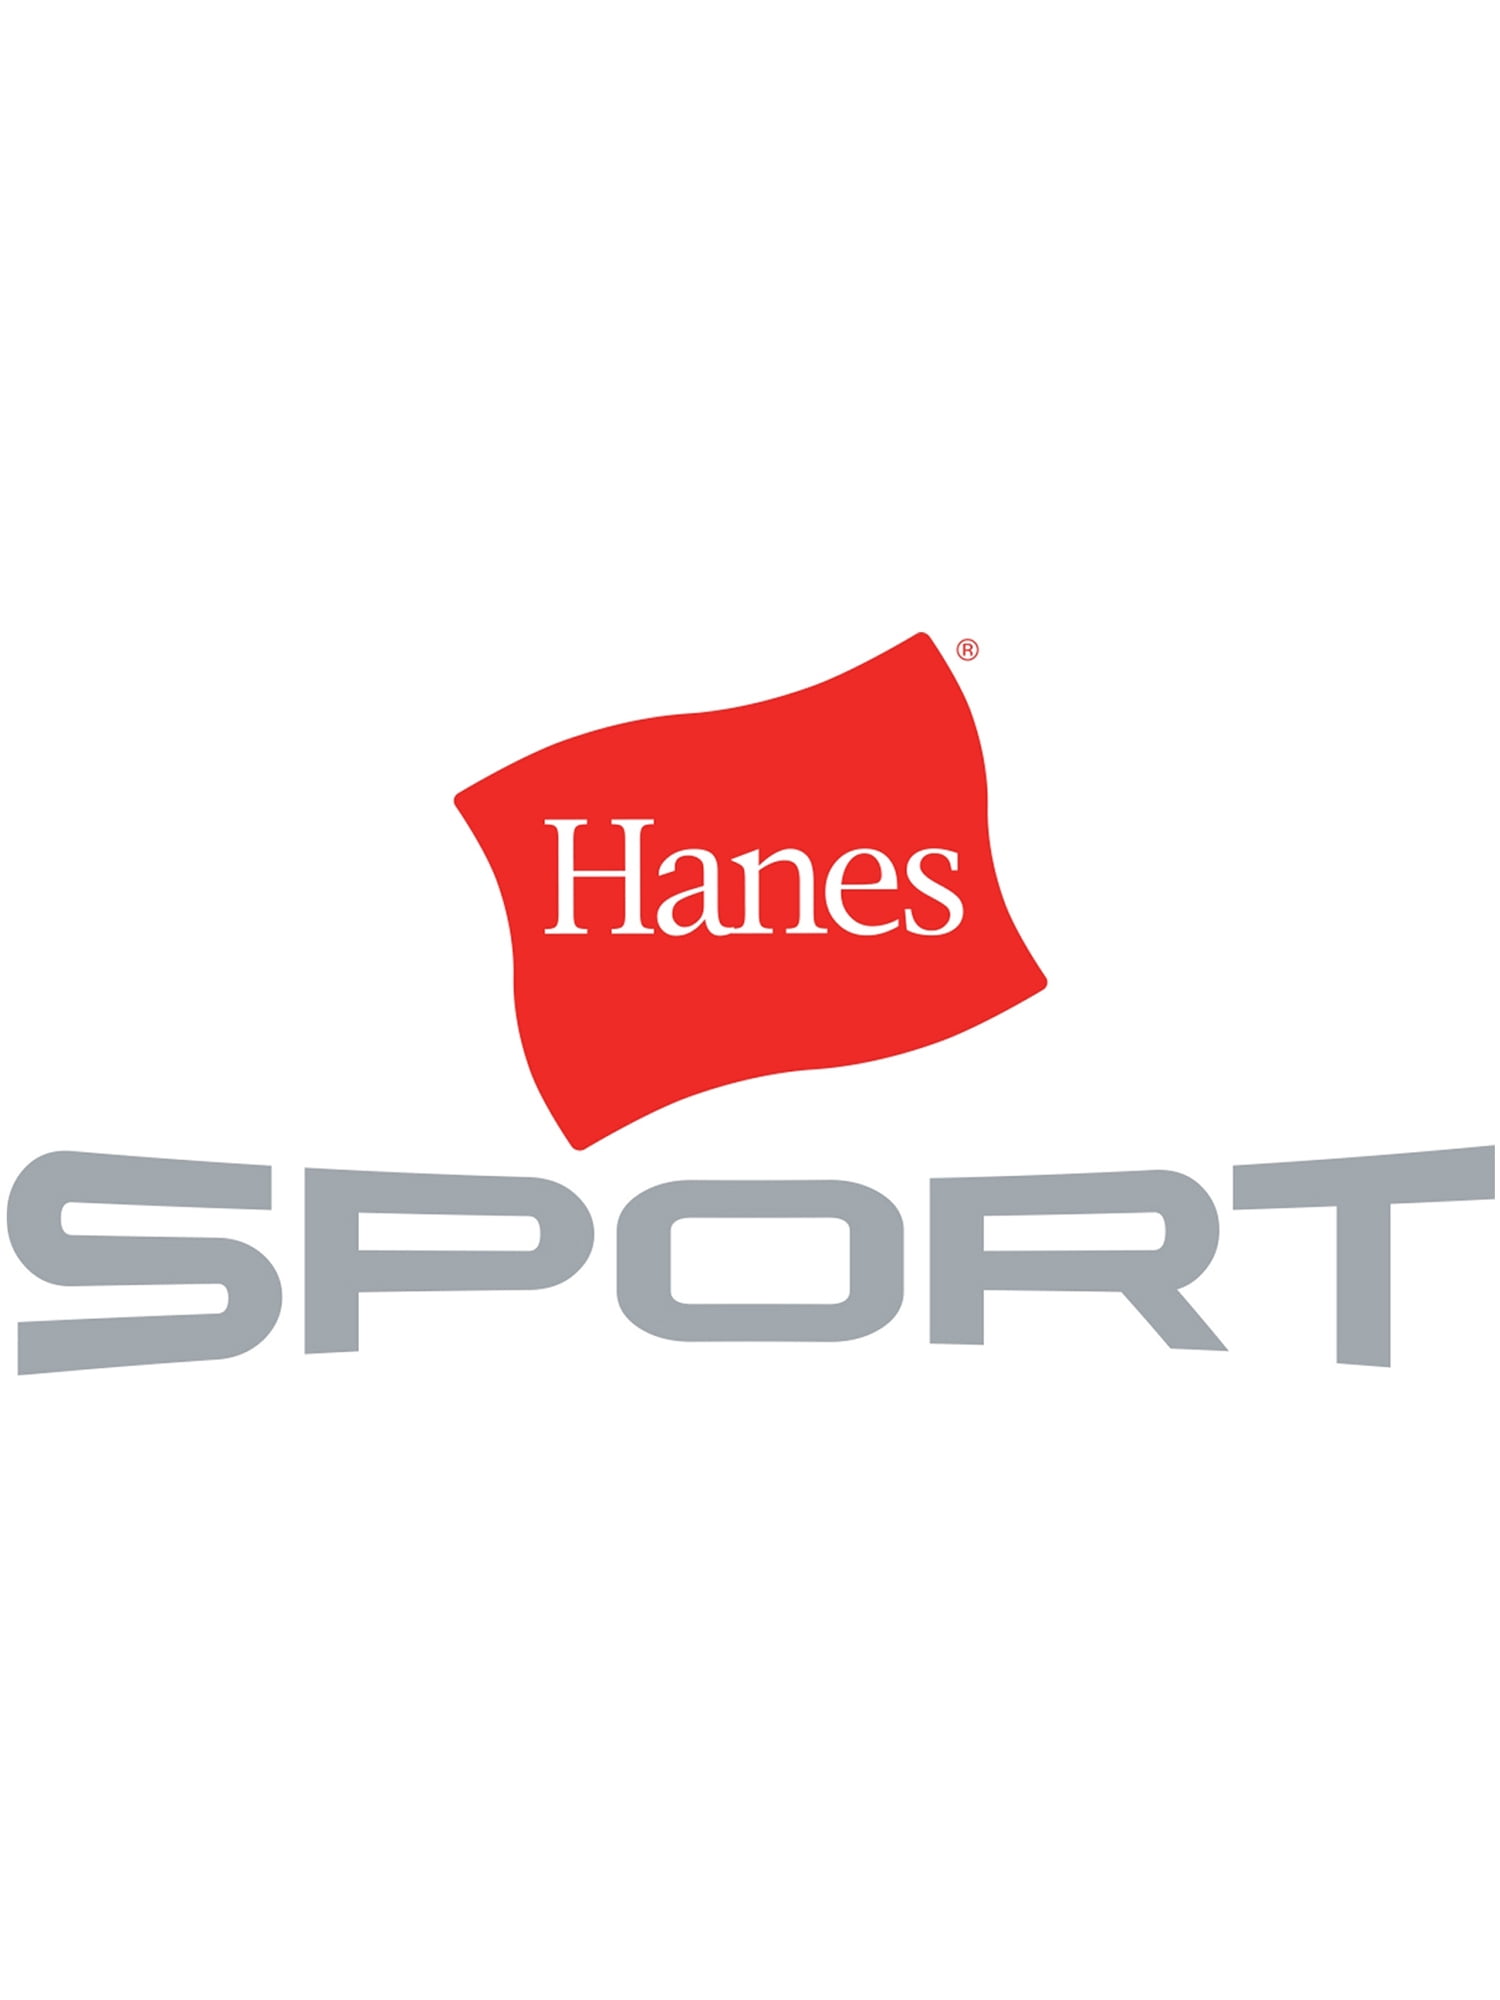 Hanes - Sport Women's Performance Stretch Tank - Walmart.com - Walmart.com